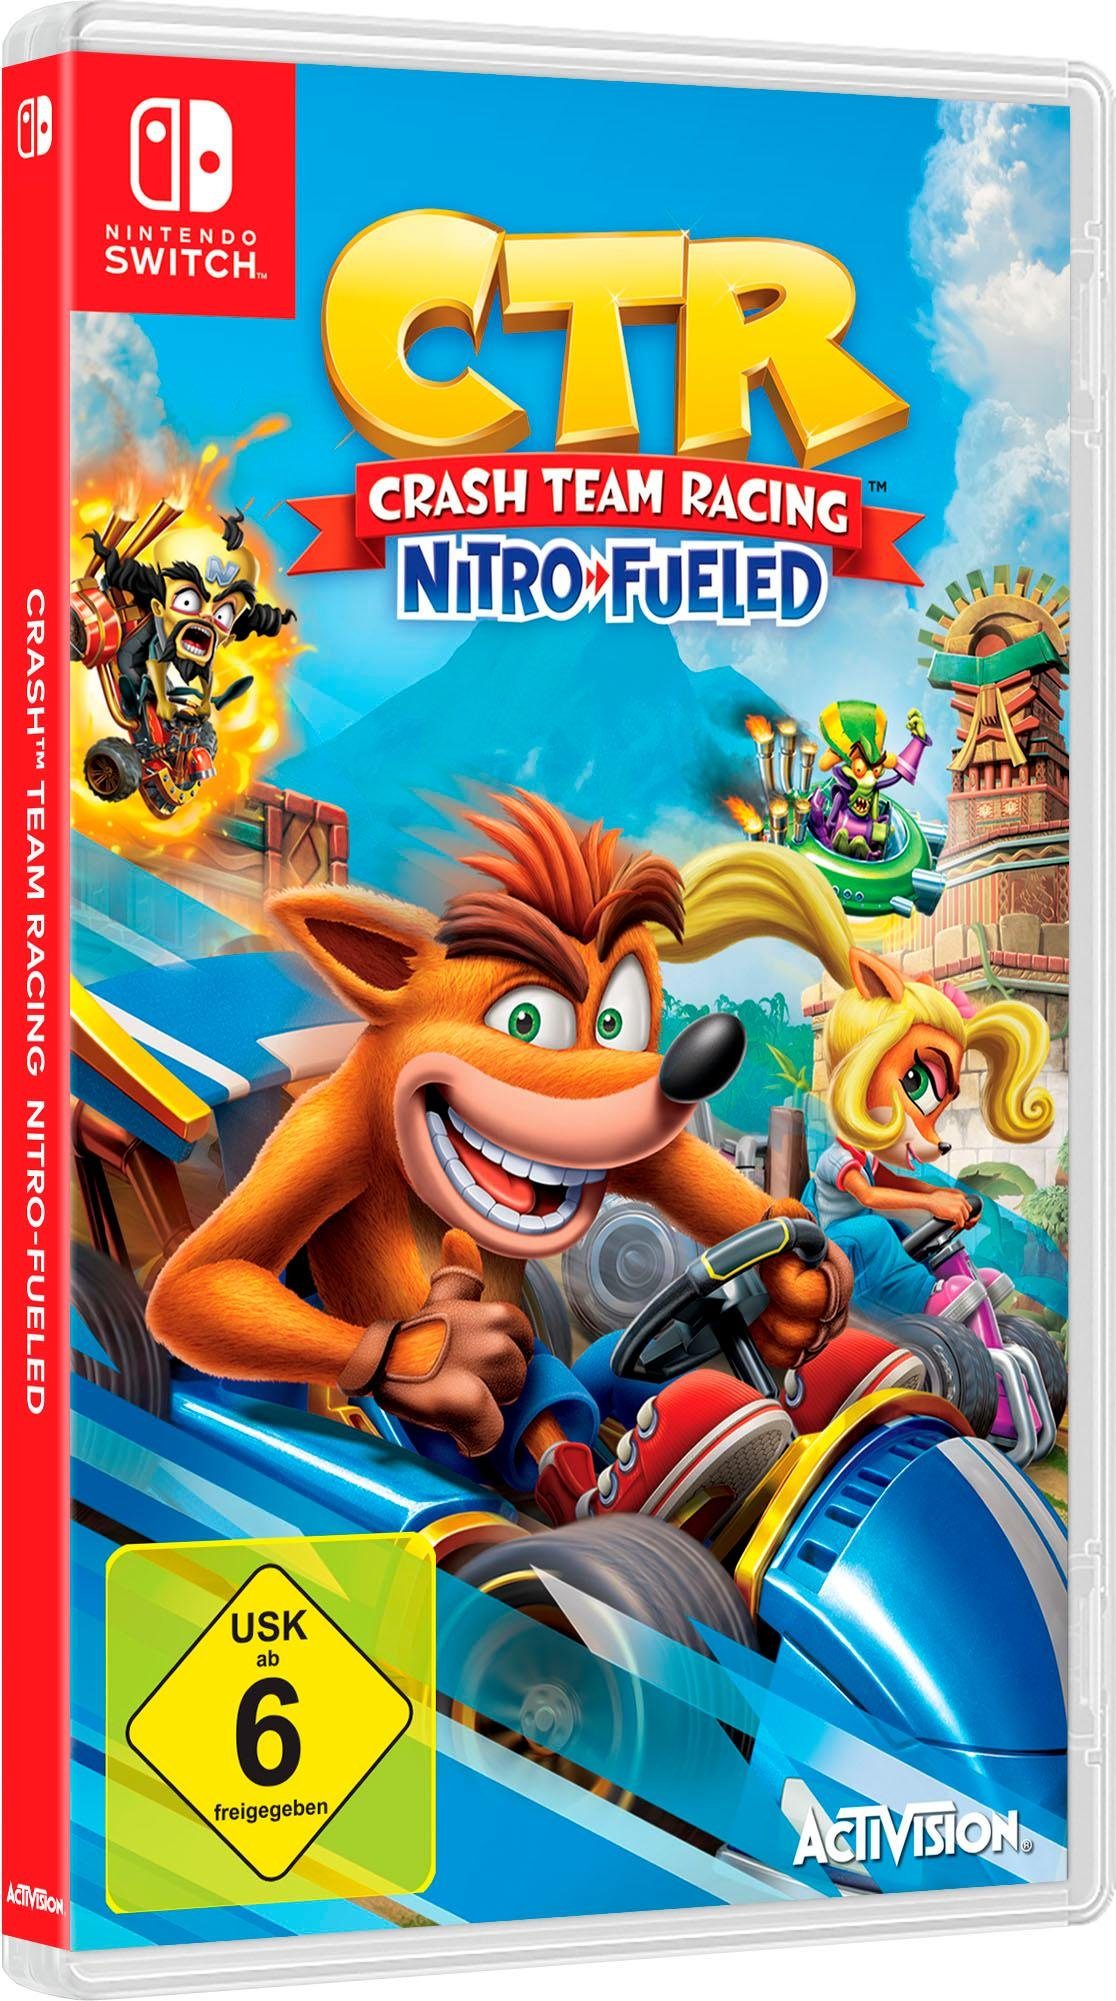 Switch Nitro CTR Racing Nintendo Crash Activision Fueled Team